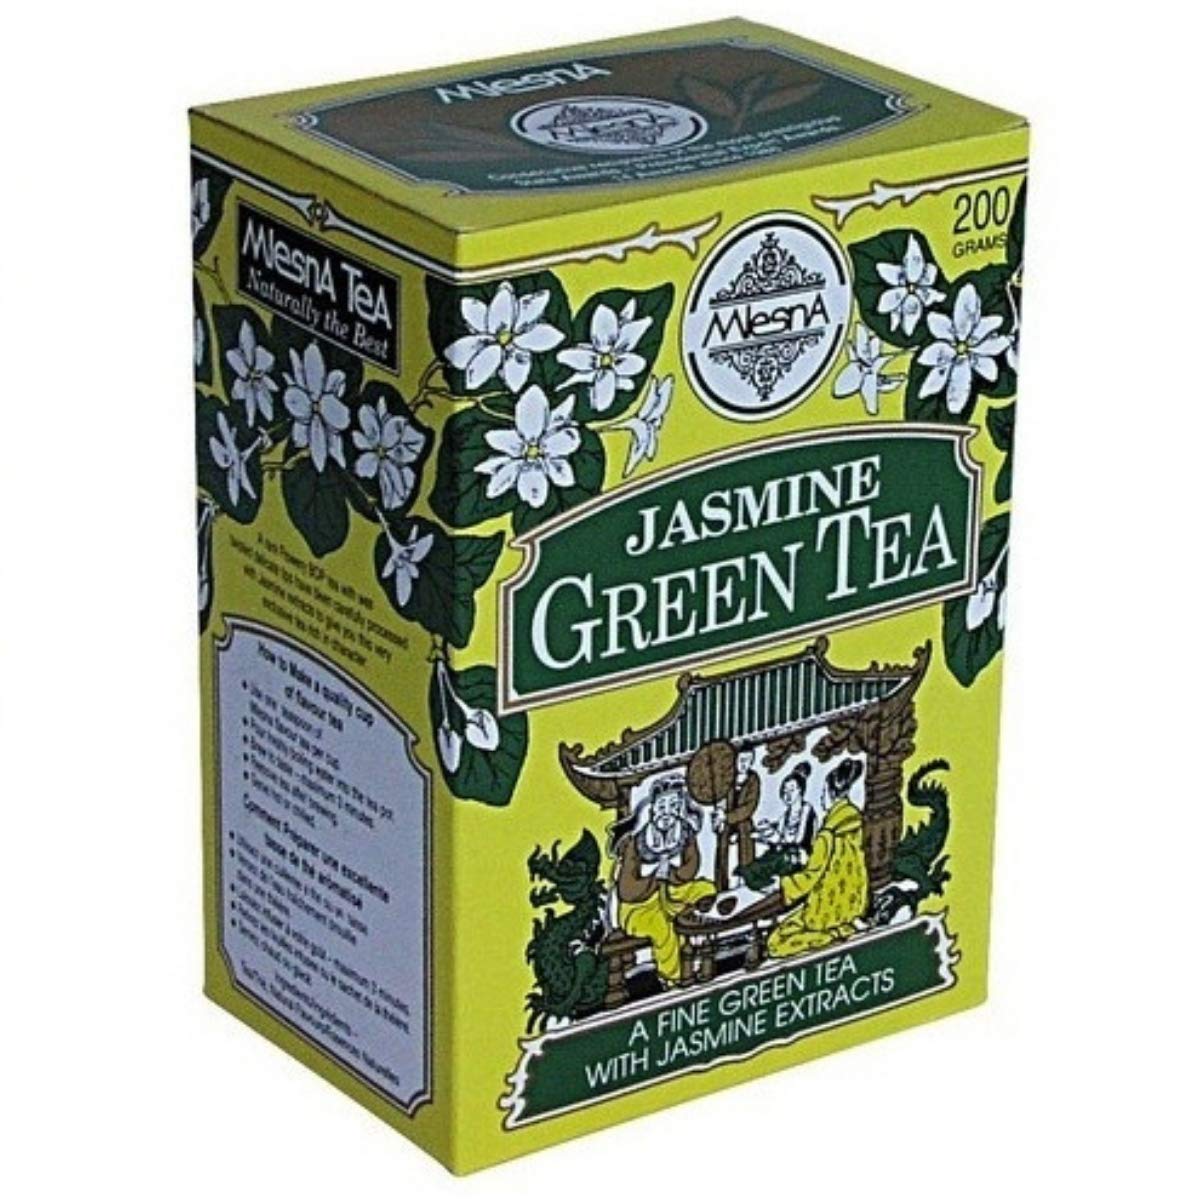 Mlesna Jasmine Green Tea, Loose Tea 200g